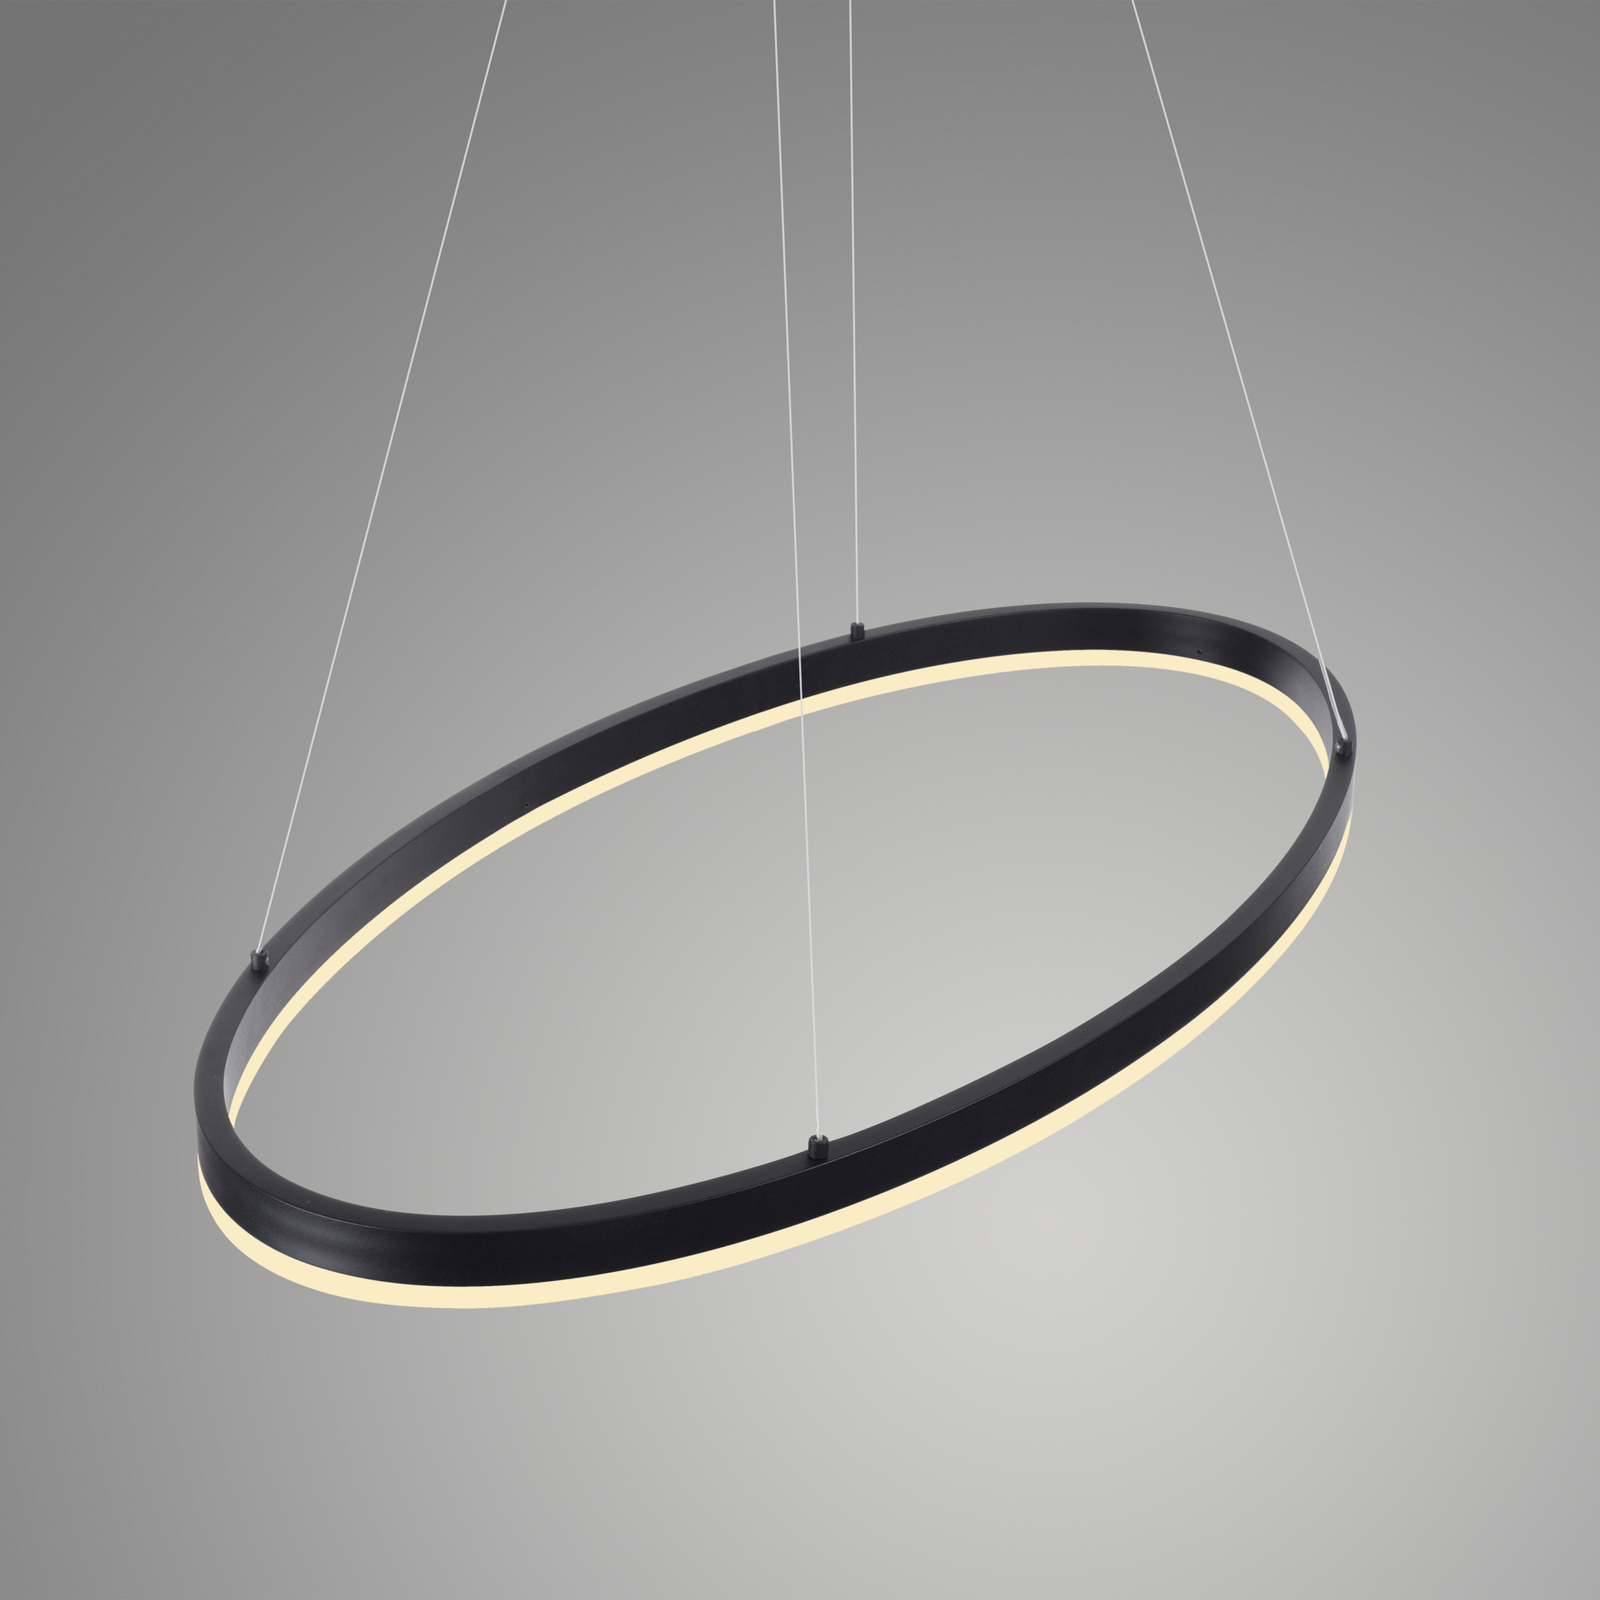 Paul Neuhaus Titus LED hanglamp, Oval 80x39cm